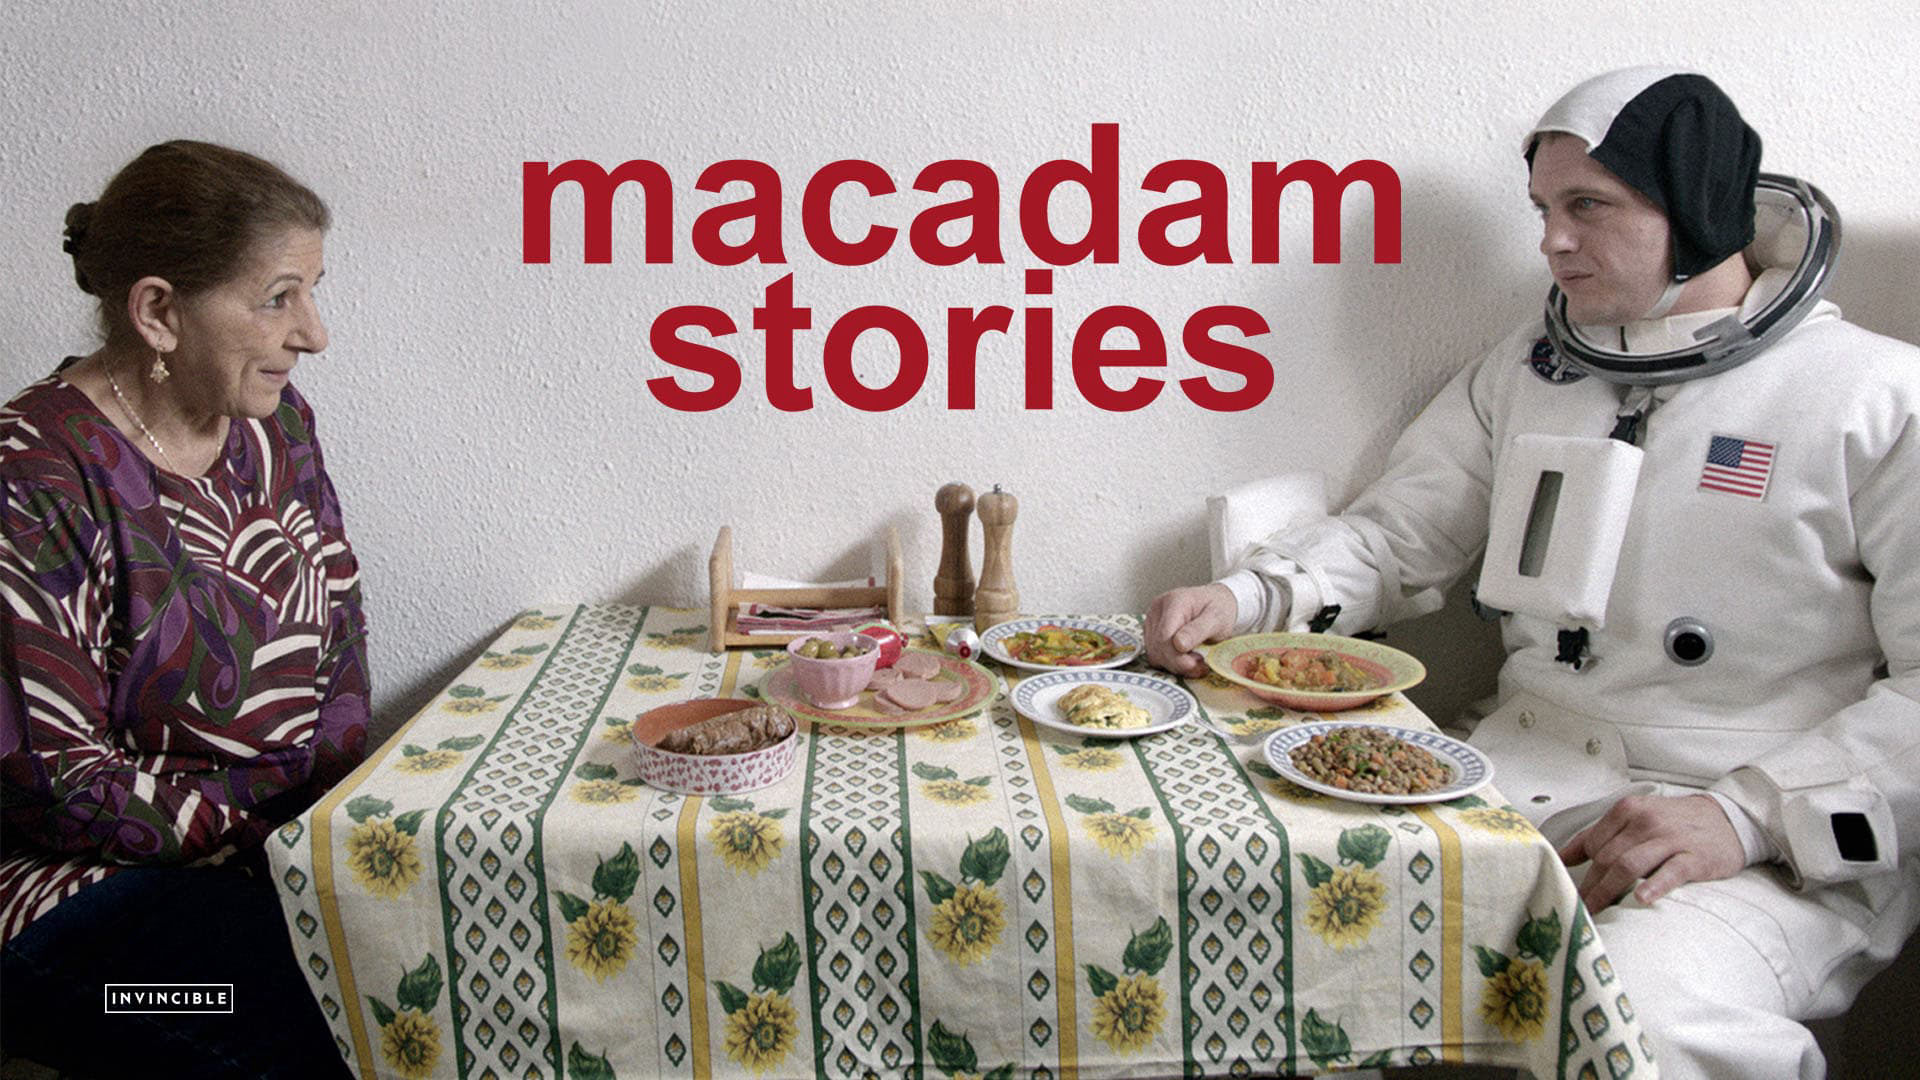 Macadam Stories / Macadam Stories (2015)